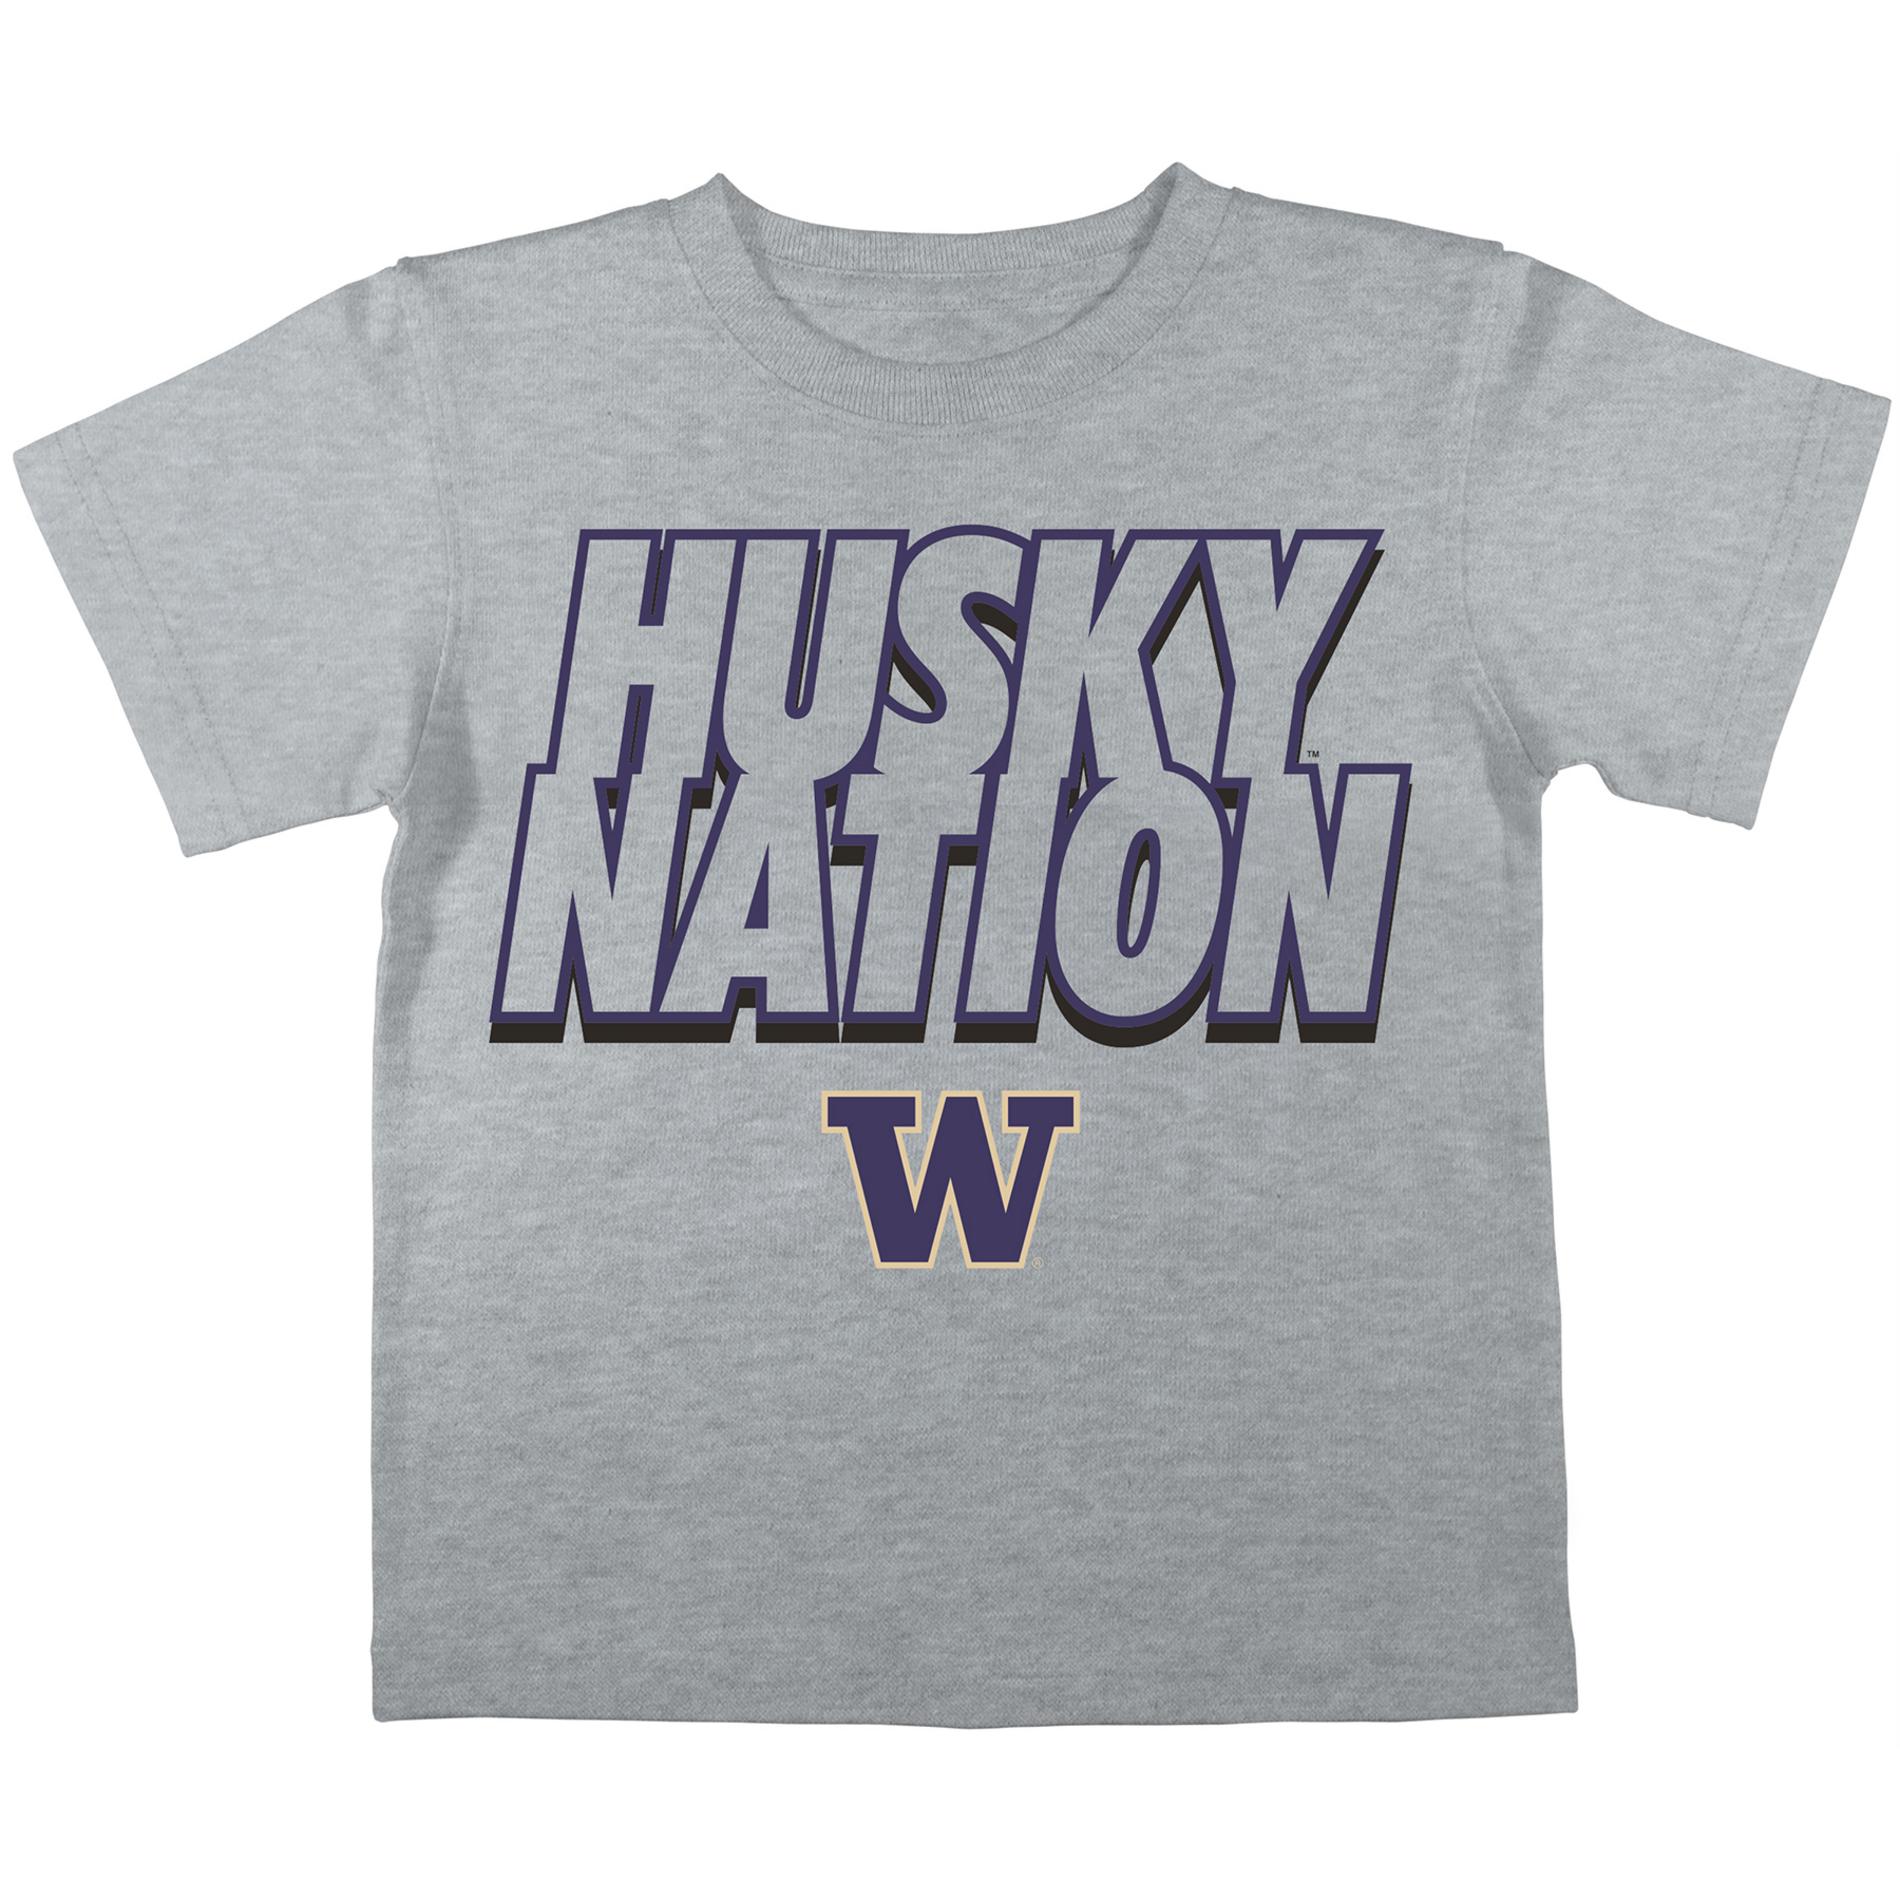 NCAA Boy's Graphic T-Shirt - University of Washington Huskies